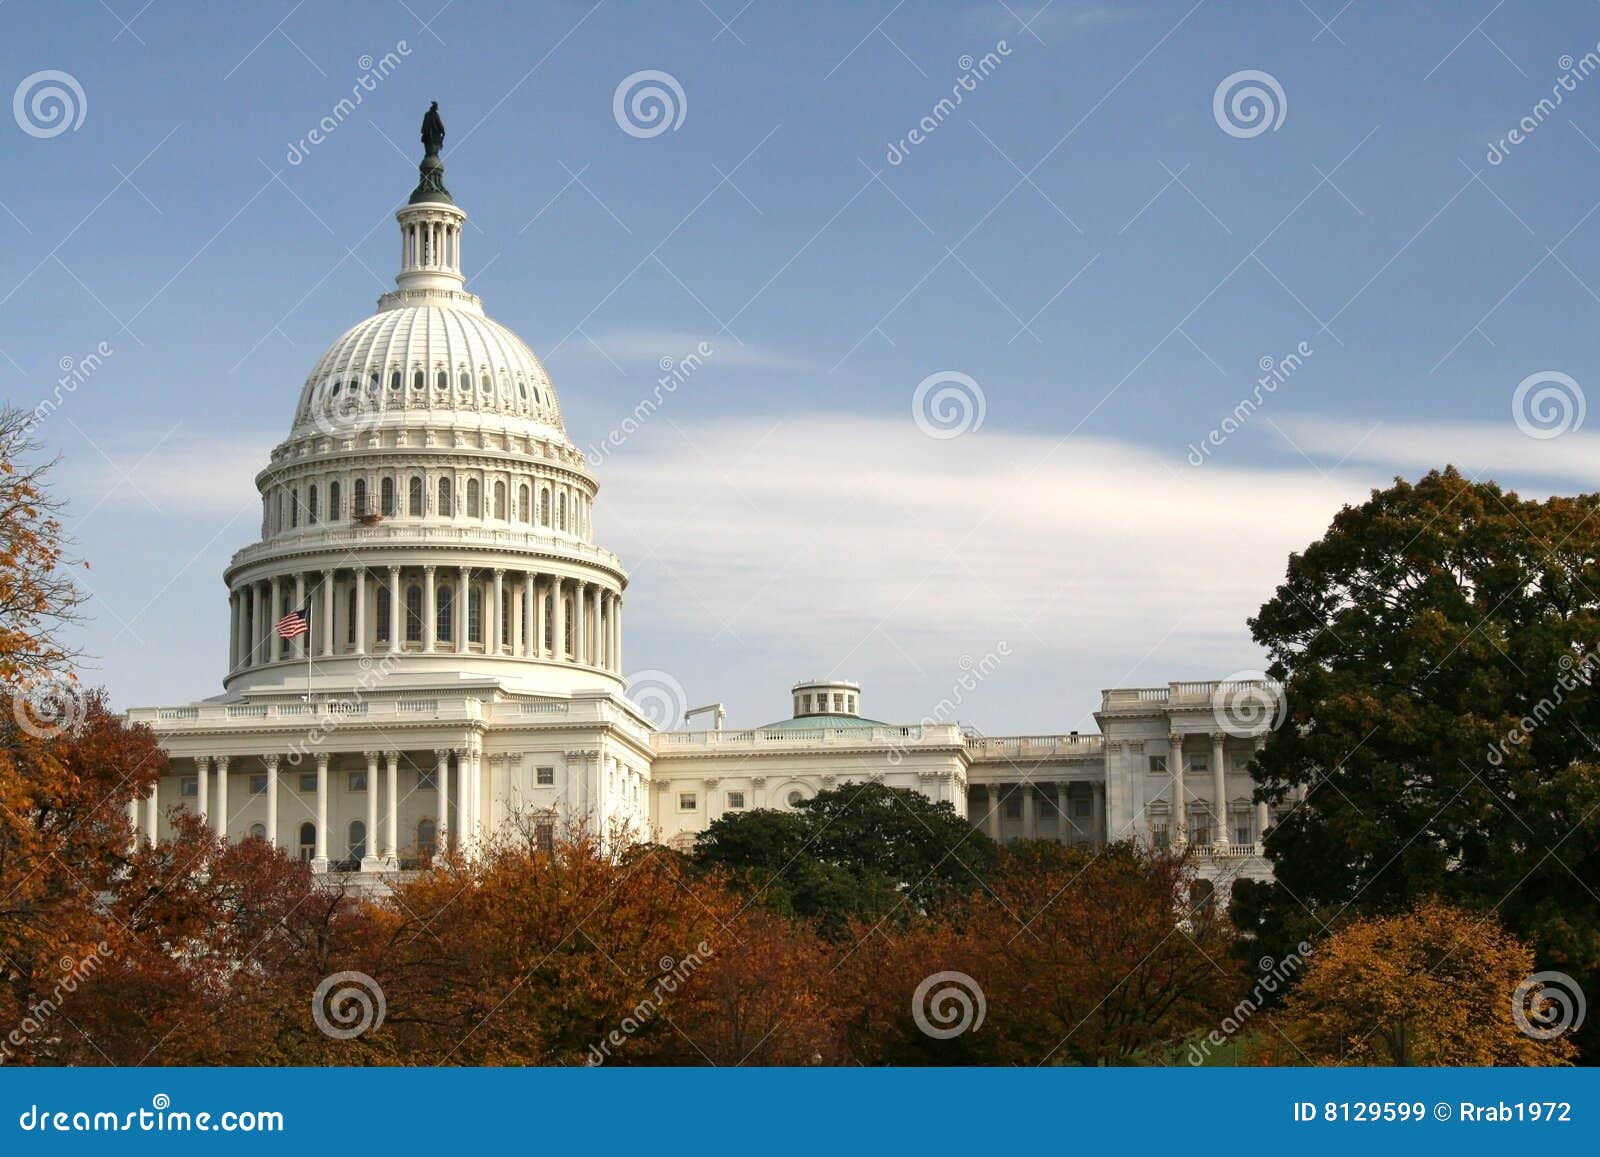 house of representatives capitol hill building